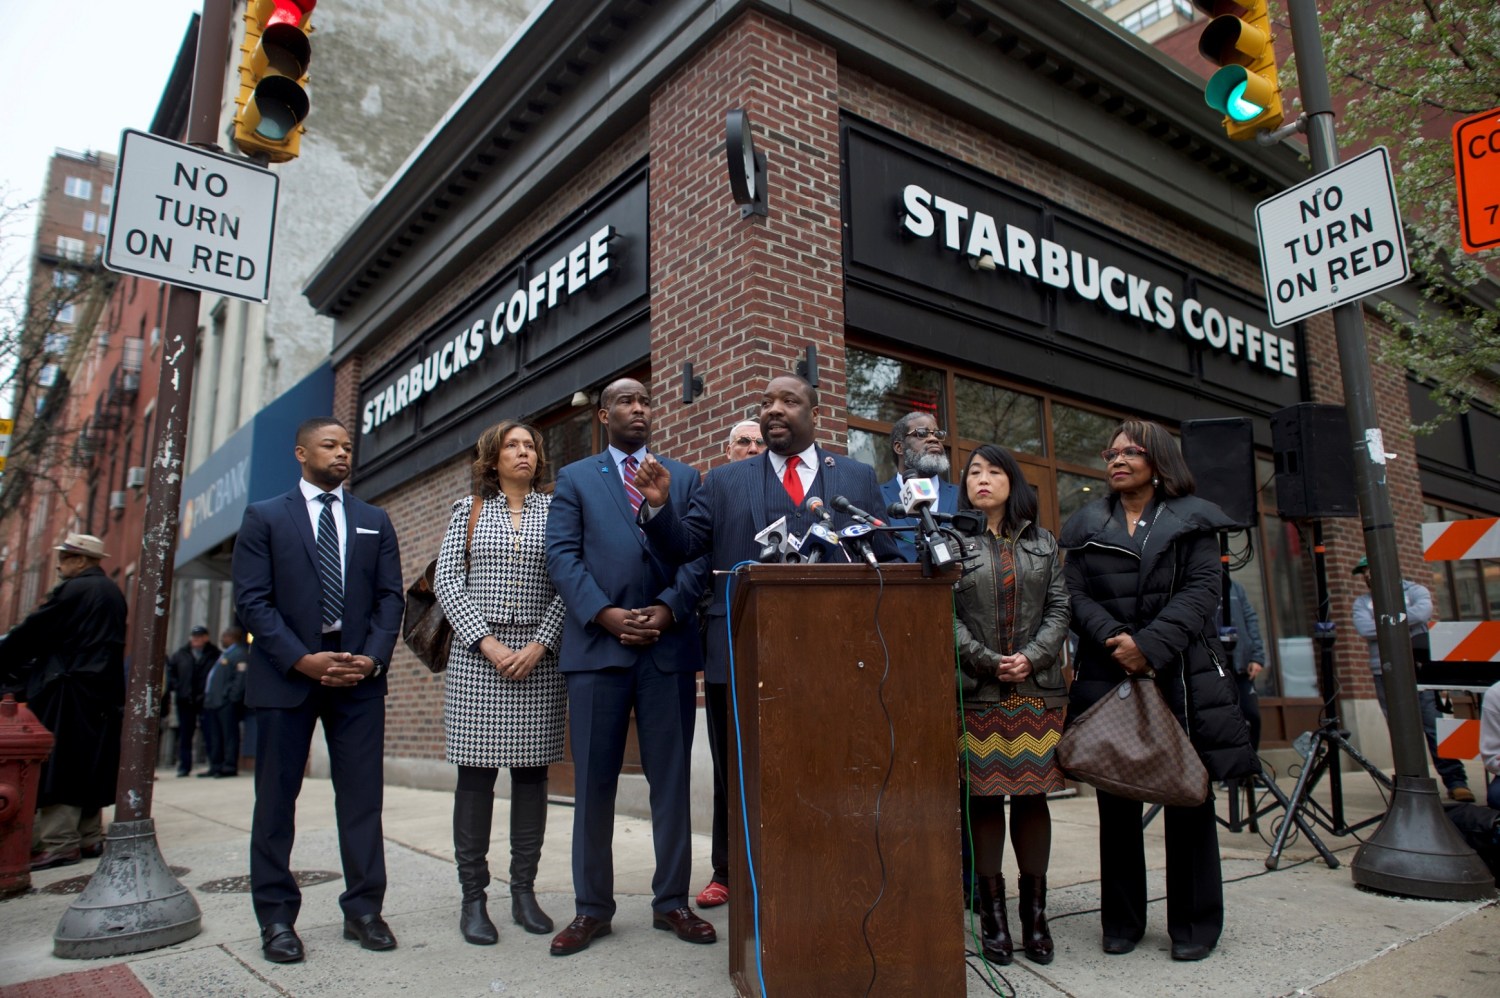 Philadelphia Councilman Kenyatta Johnson (C) addresses the media along with colleagues, outside the Center City Starbucks, where two black men were arrested, in Philadelphia, Pennsylvania U.S. April 16, 2018.  REUTERS/Mark Makela - RC19F6DDA990